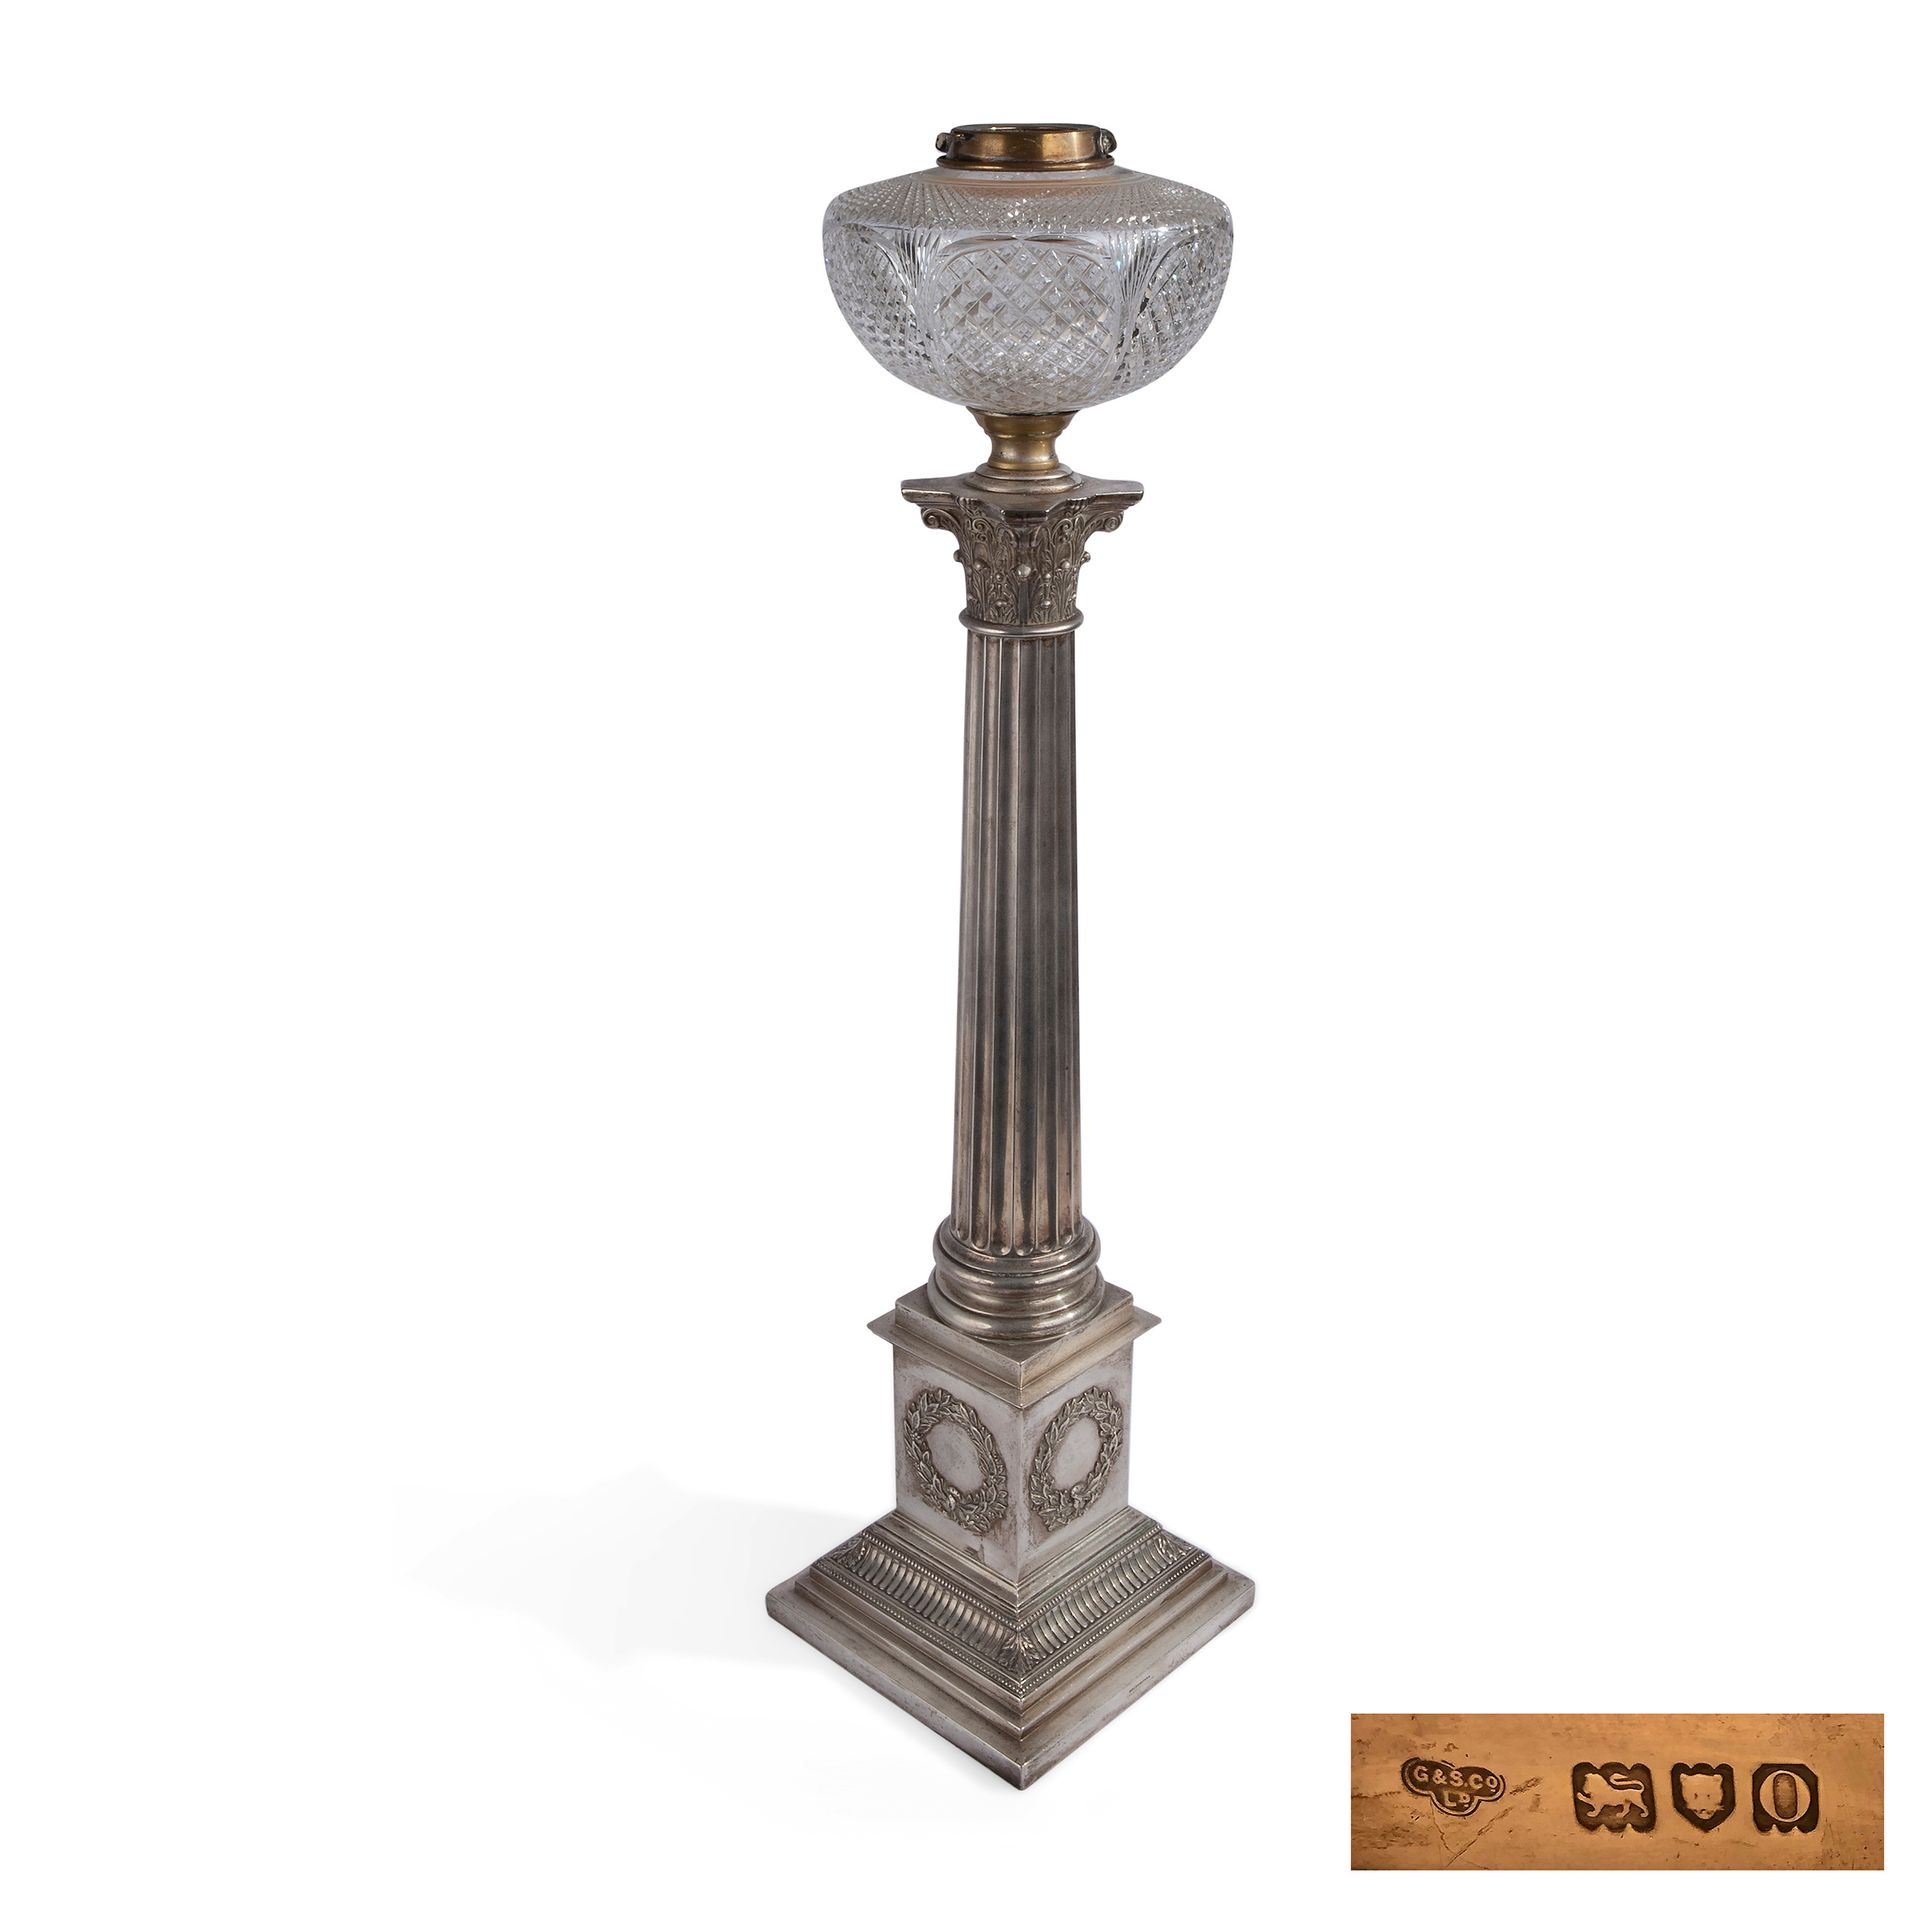 Silver column lamp, London 1909 有科林斯式的资本，爱德华七世时期尺寸为29.7x6.2x6.2英寸。